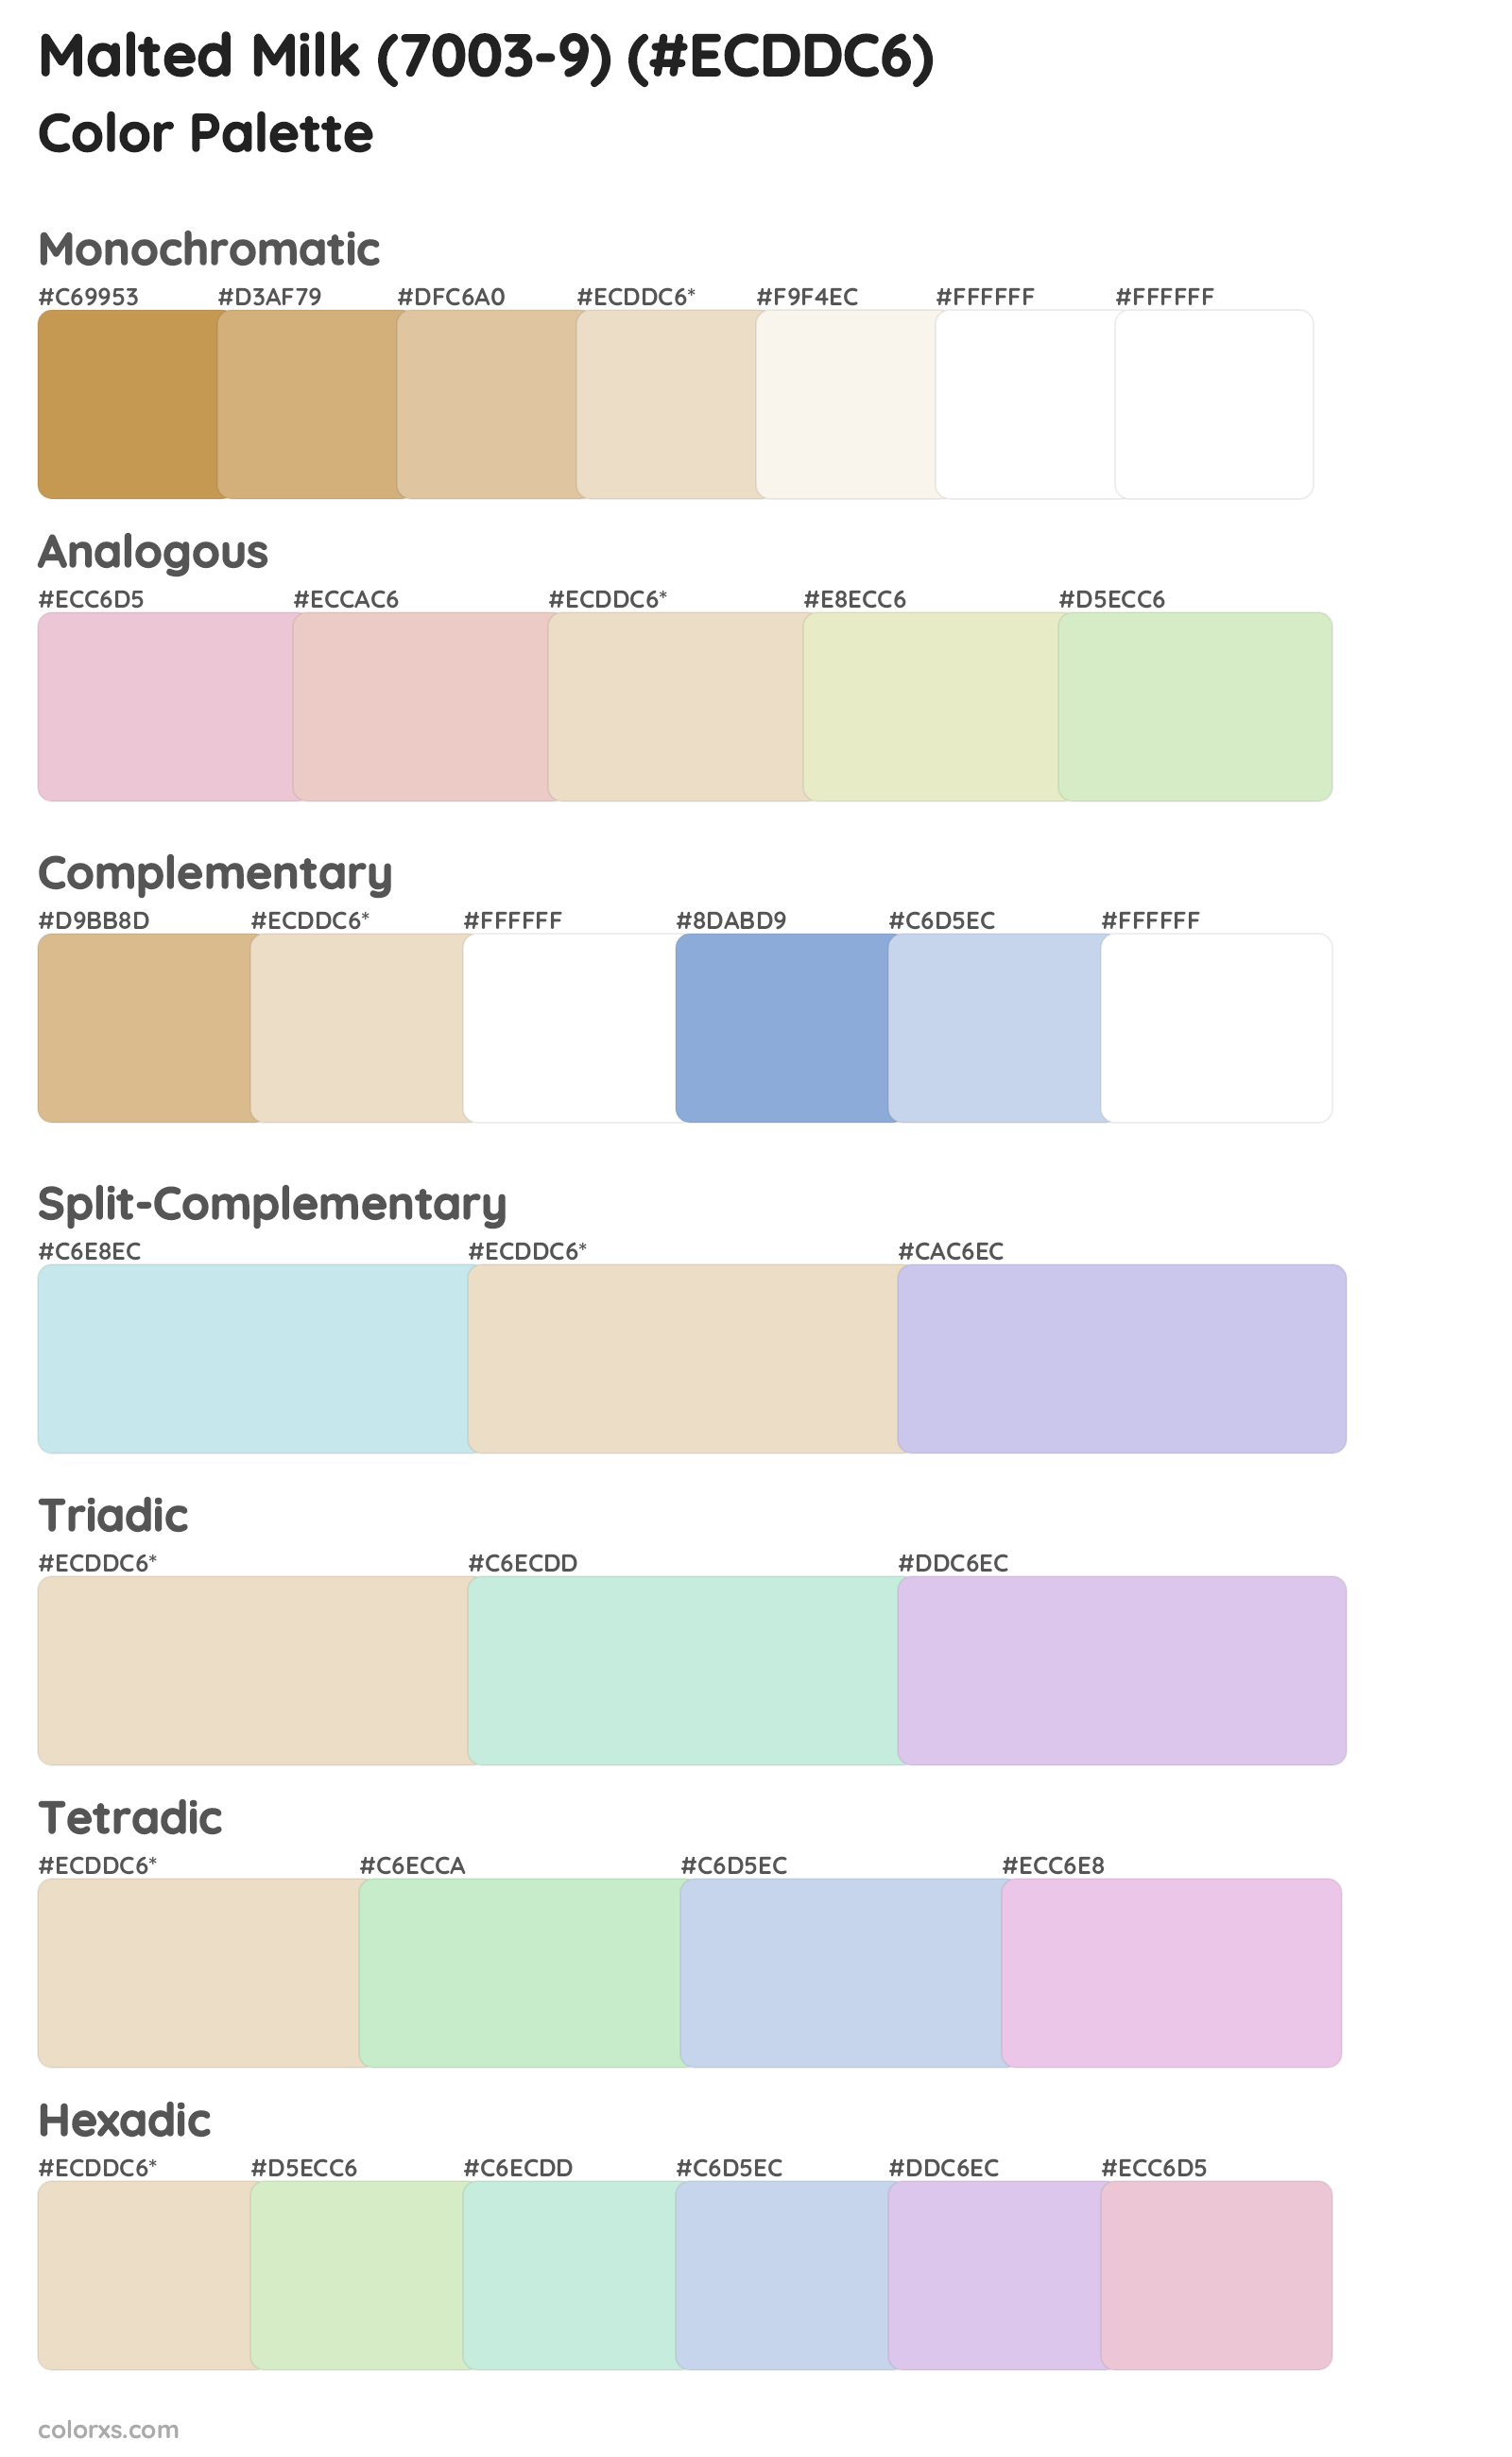 Malted Milk (7003-9) Color Scheme Palettes